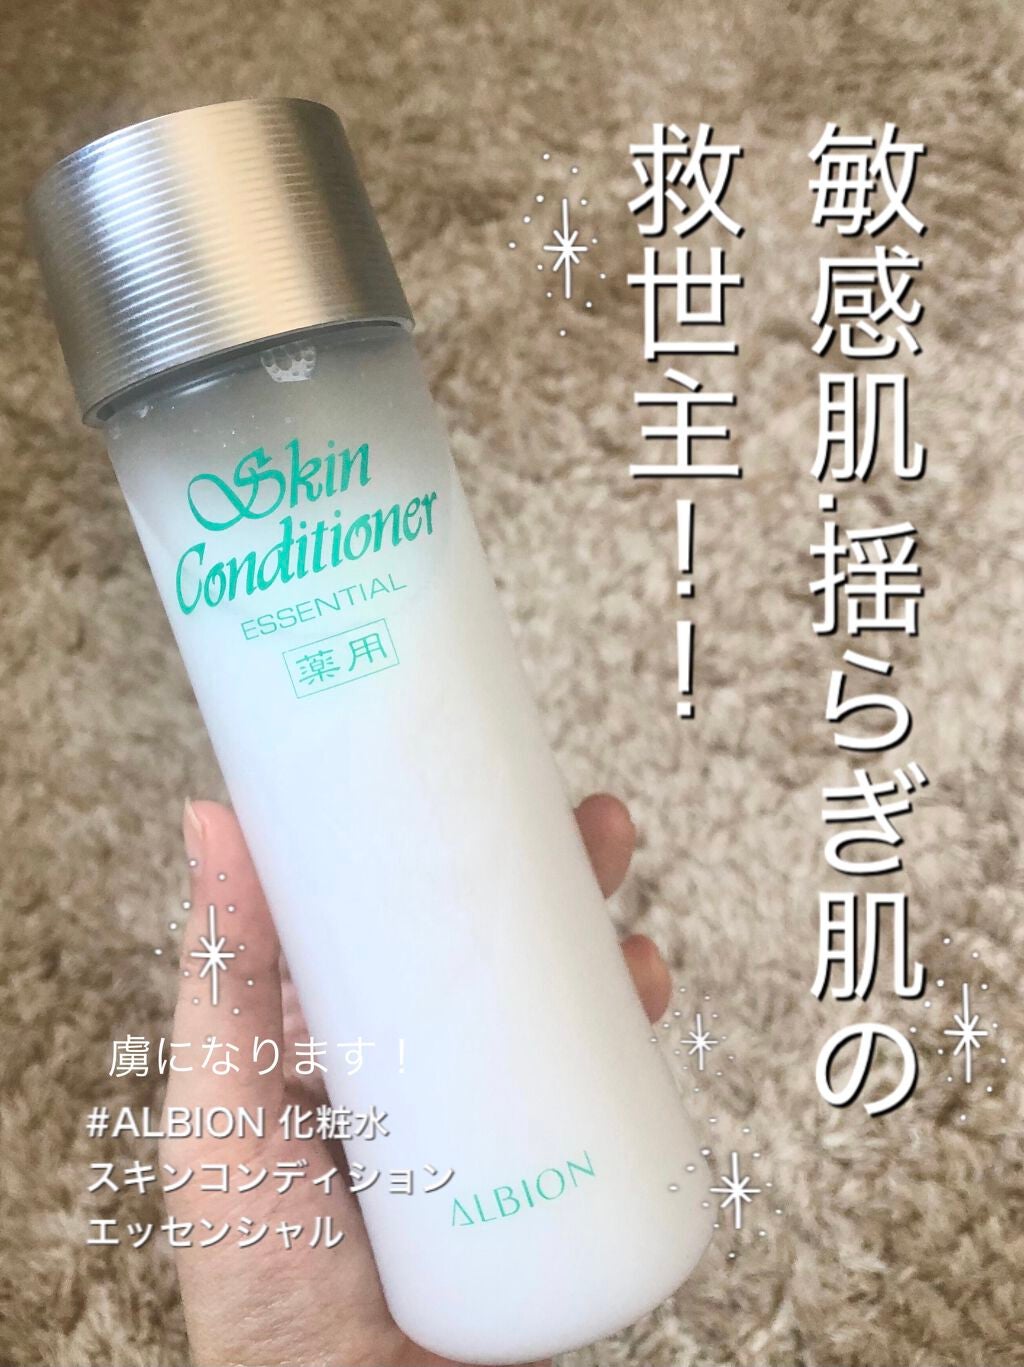 【ALBION】アルビオンスキンコンディショナーエッセンシャル〈敏感肌用化粧水〉